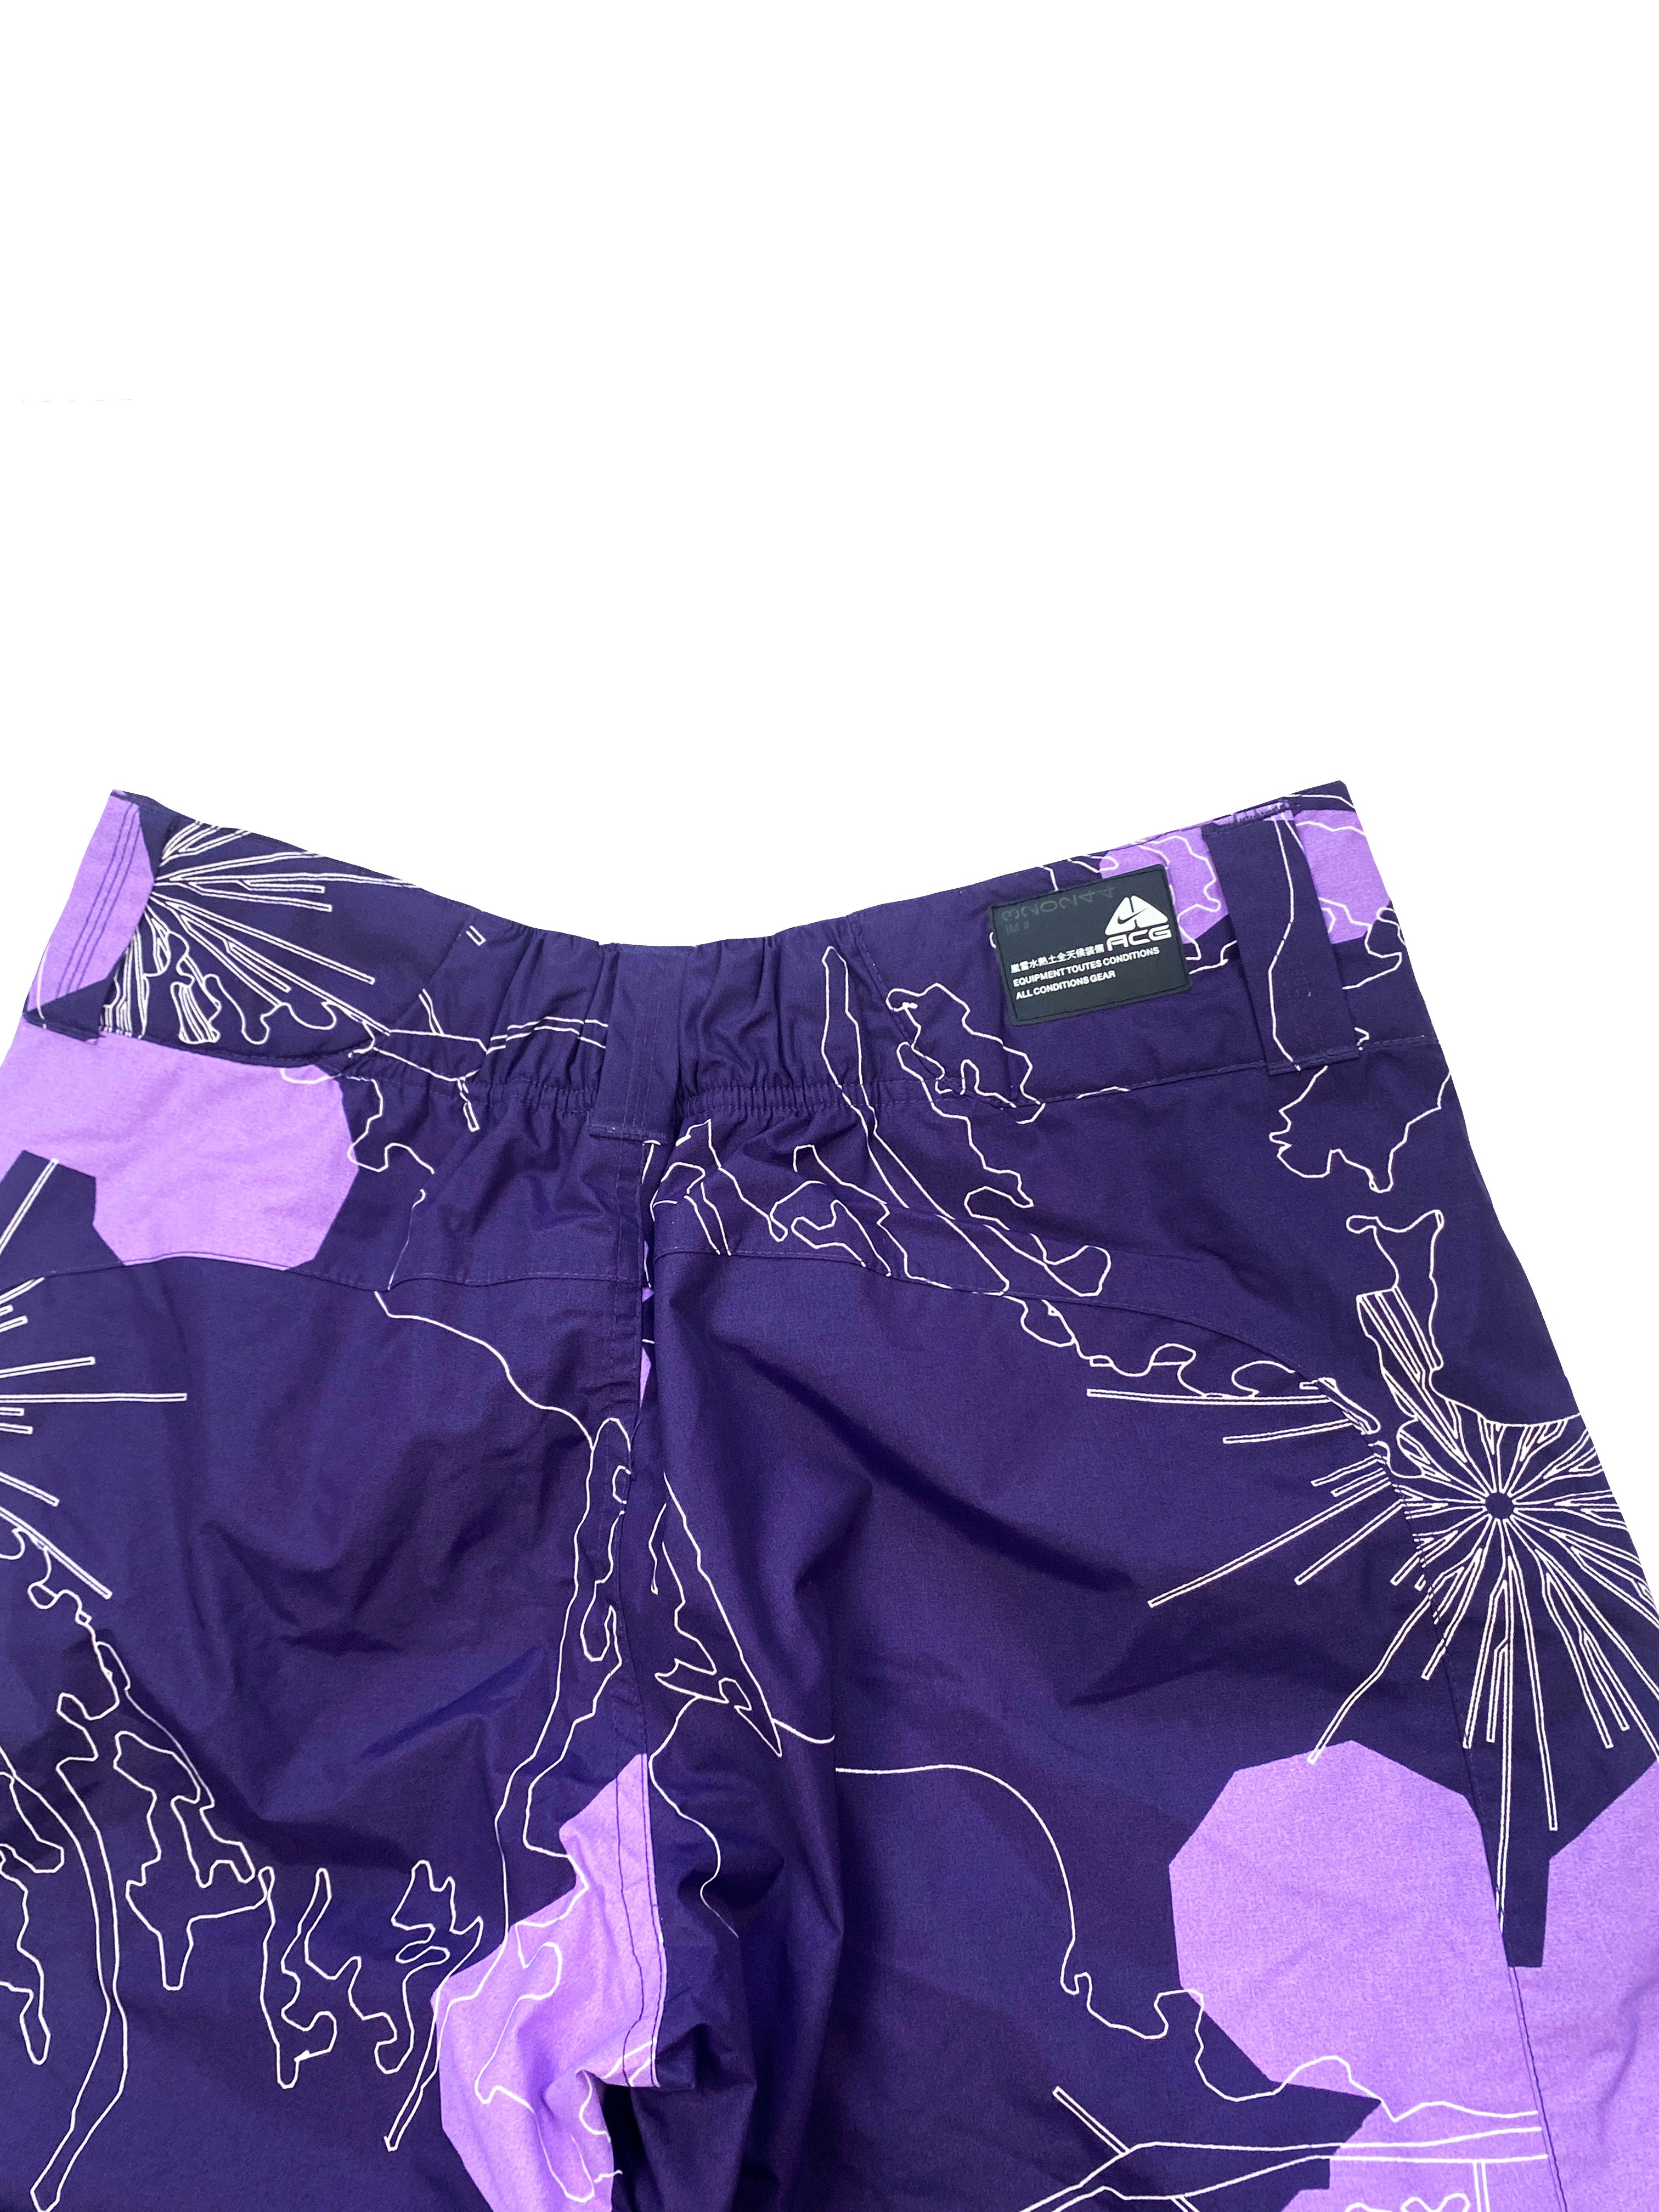 Nike ACG purple patterned storm fit trousers BNWT 00's